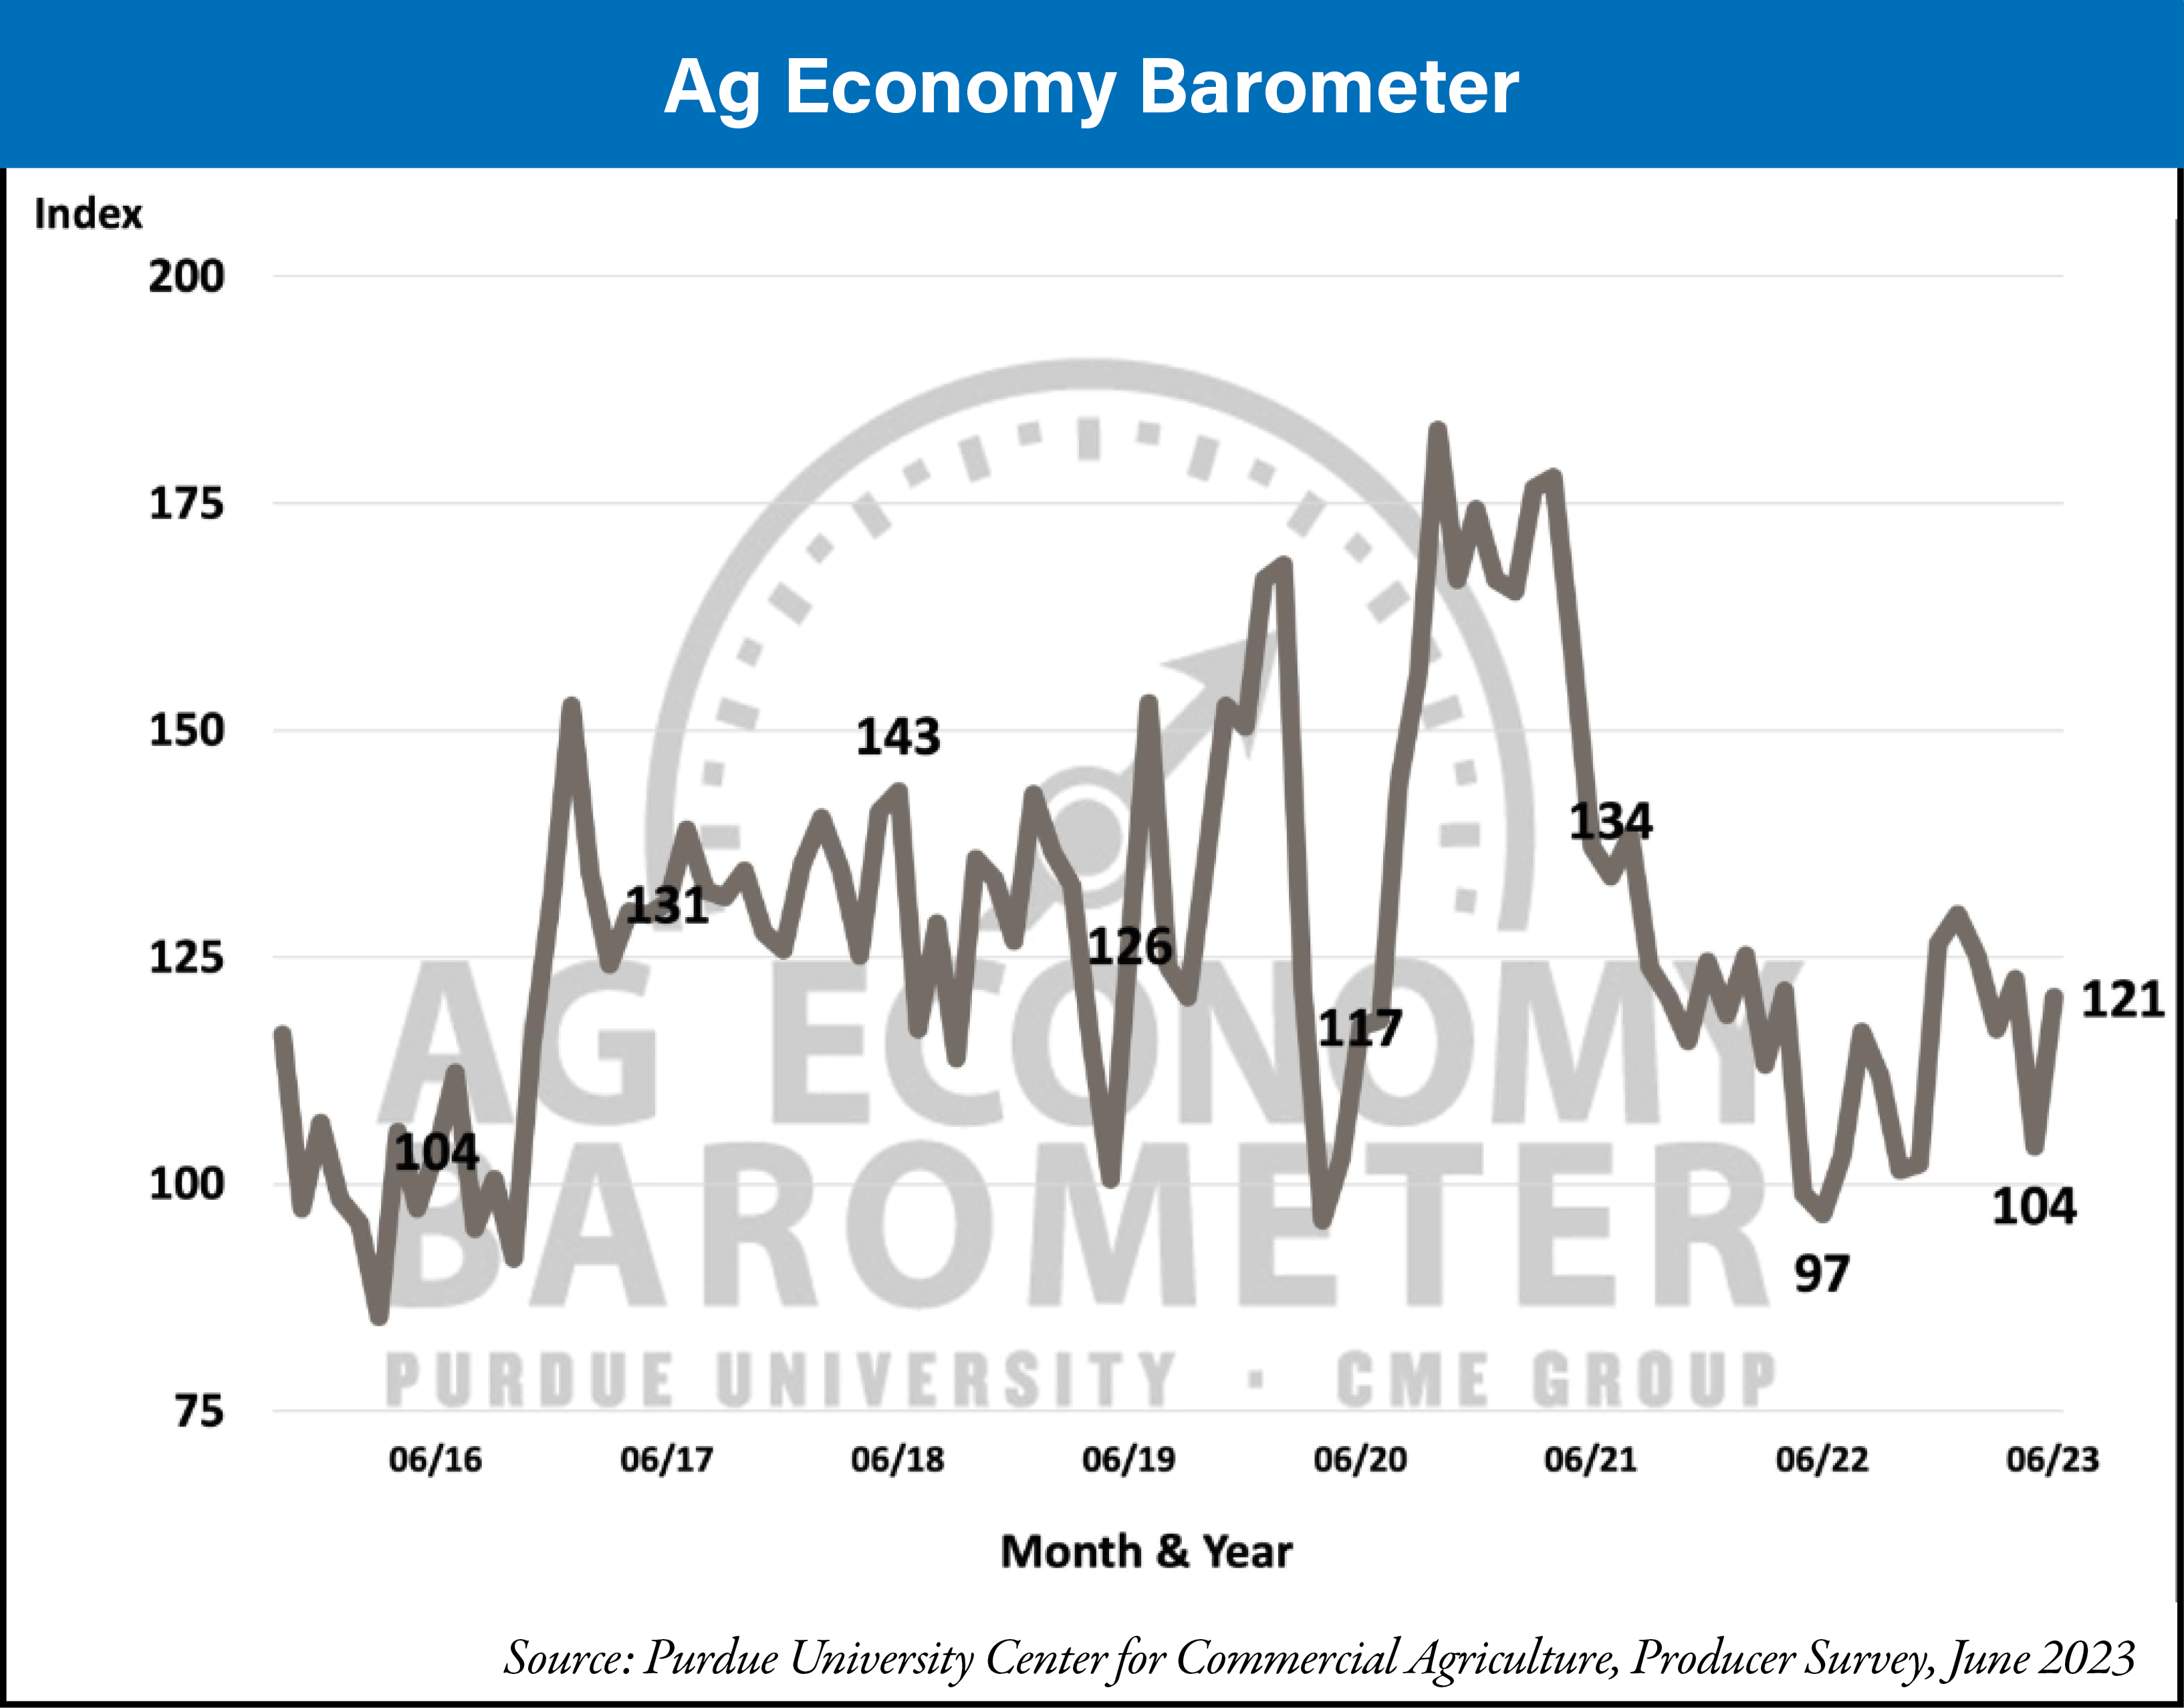 Ag-Economy-Barometer_07-23_700px.png